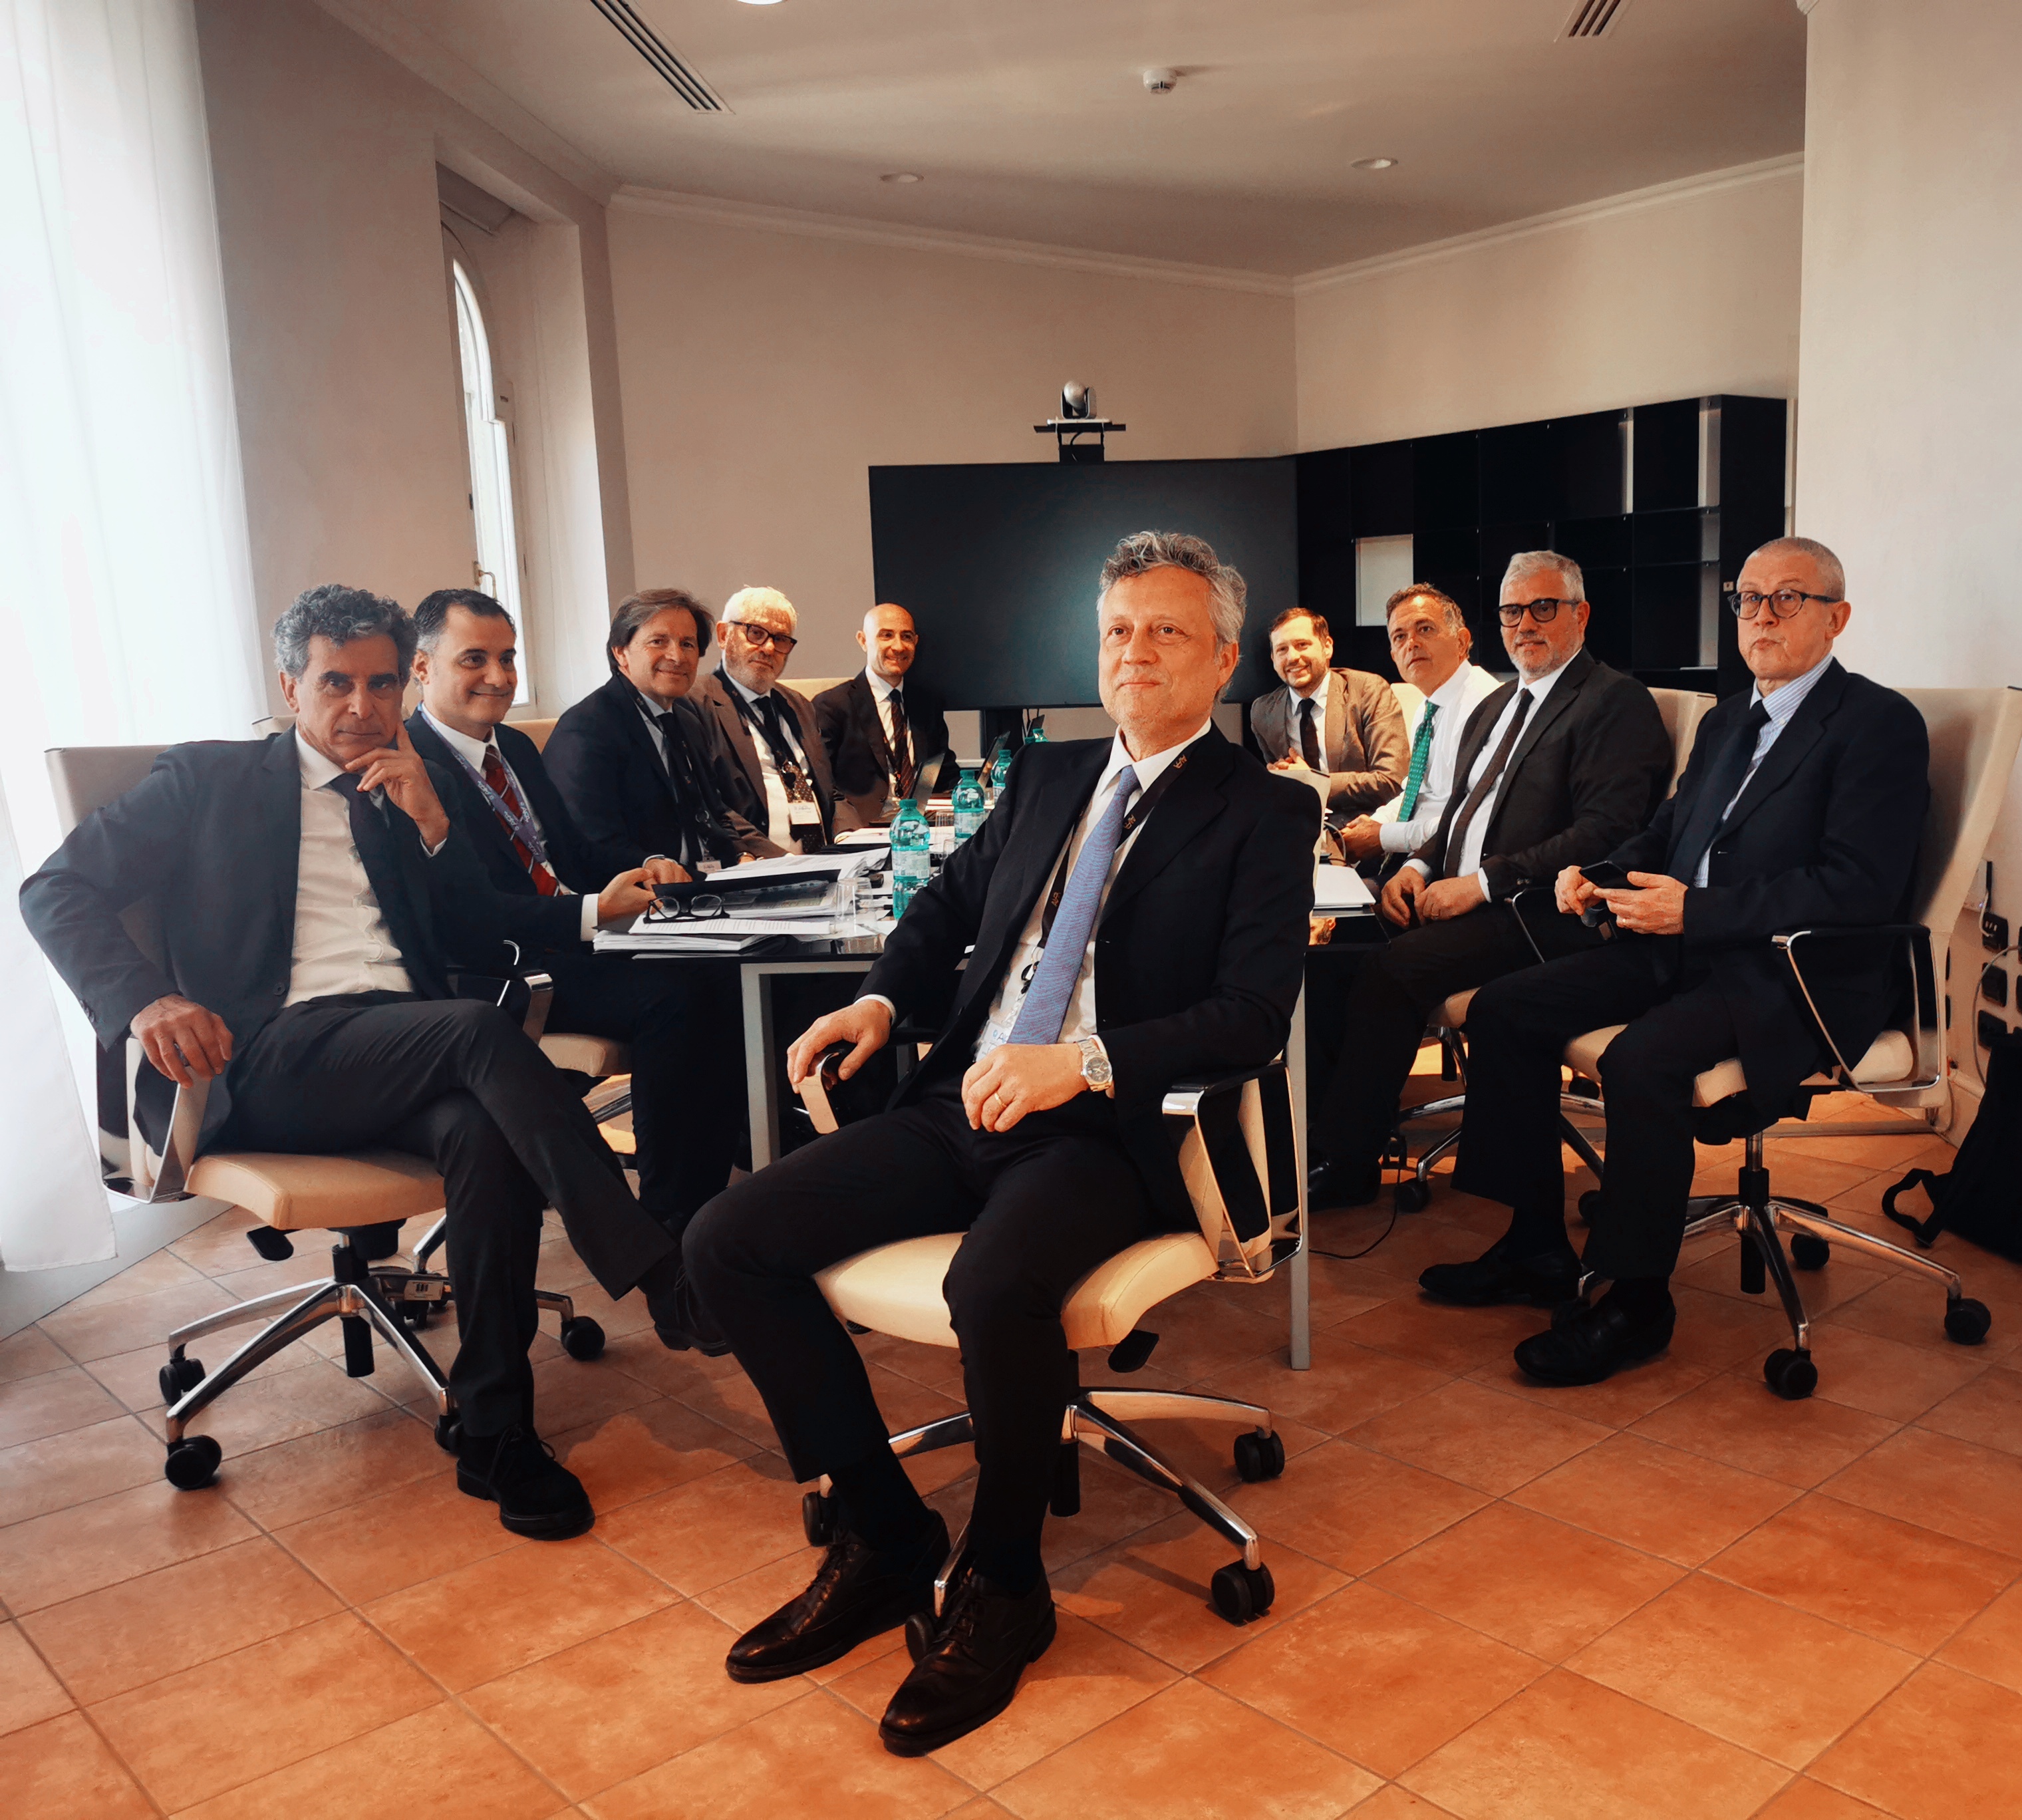 AIFA Board of Directors meeting with the new President Robert Giovanni Nisticò